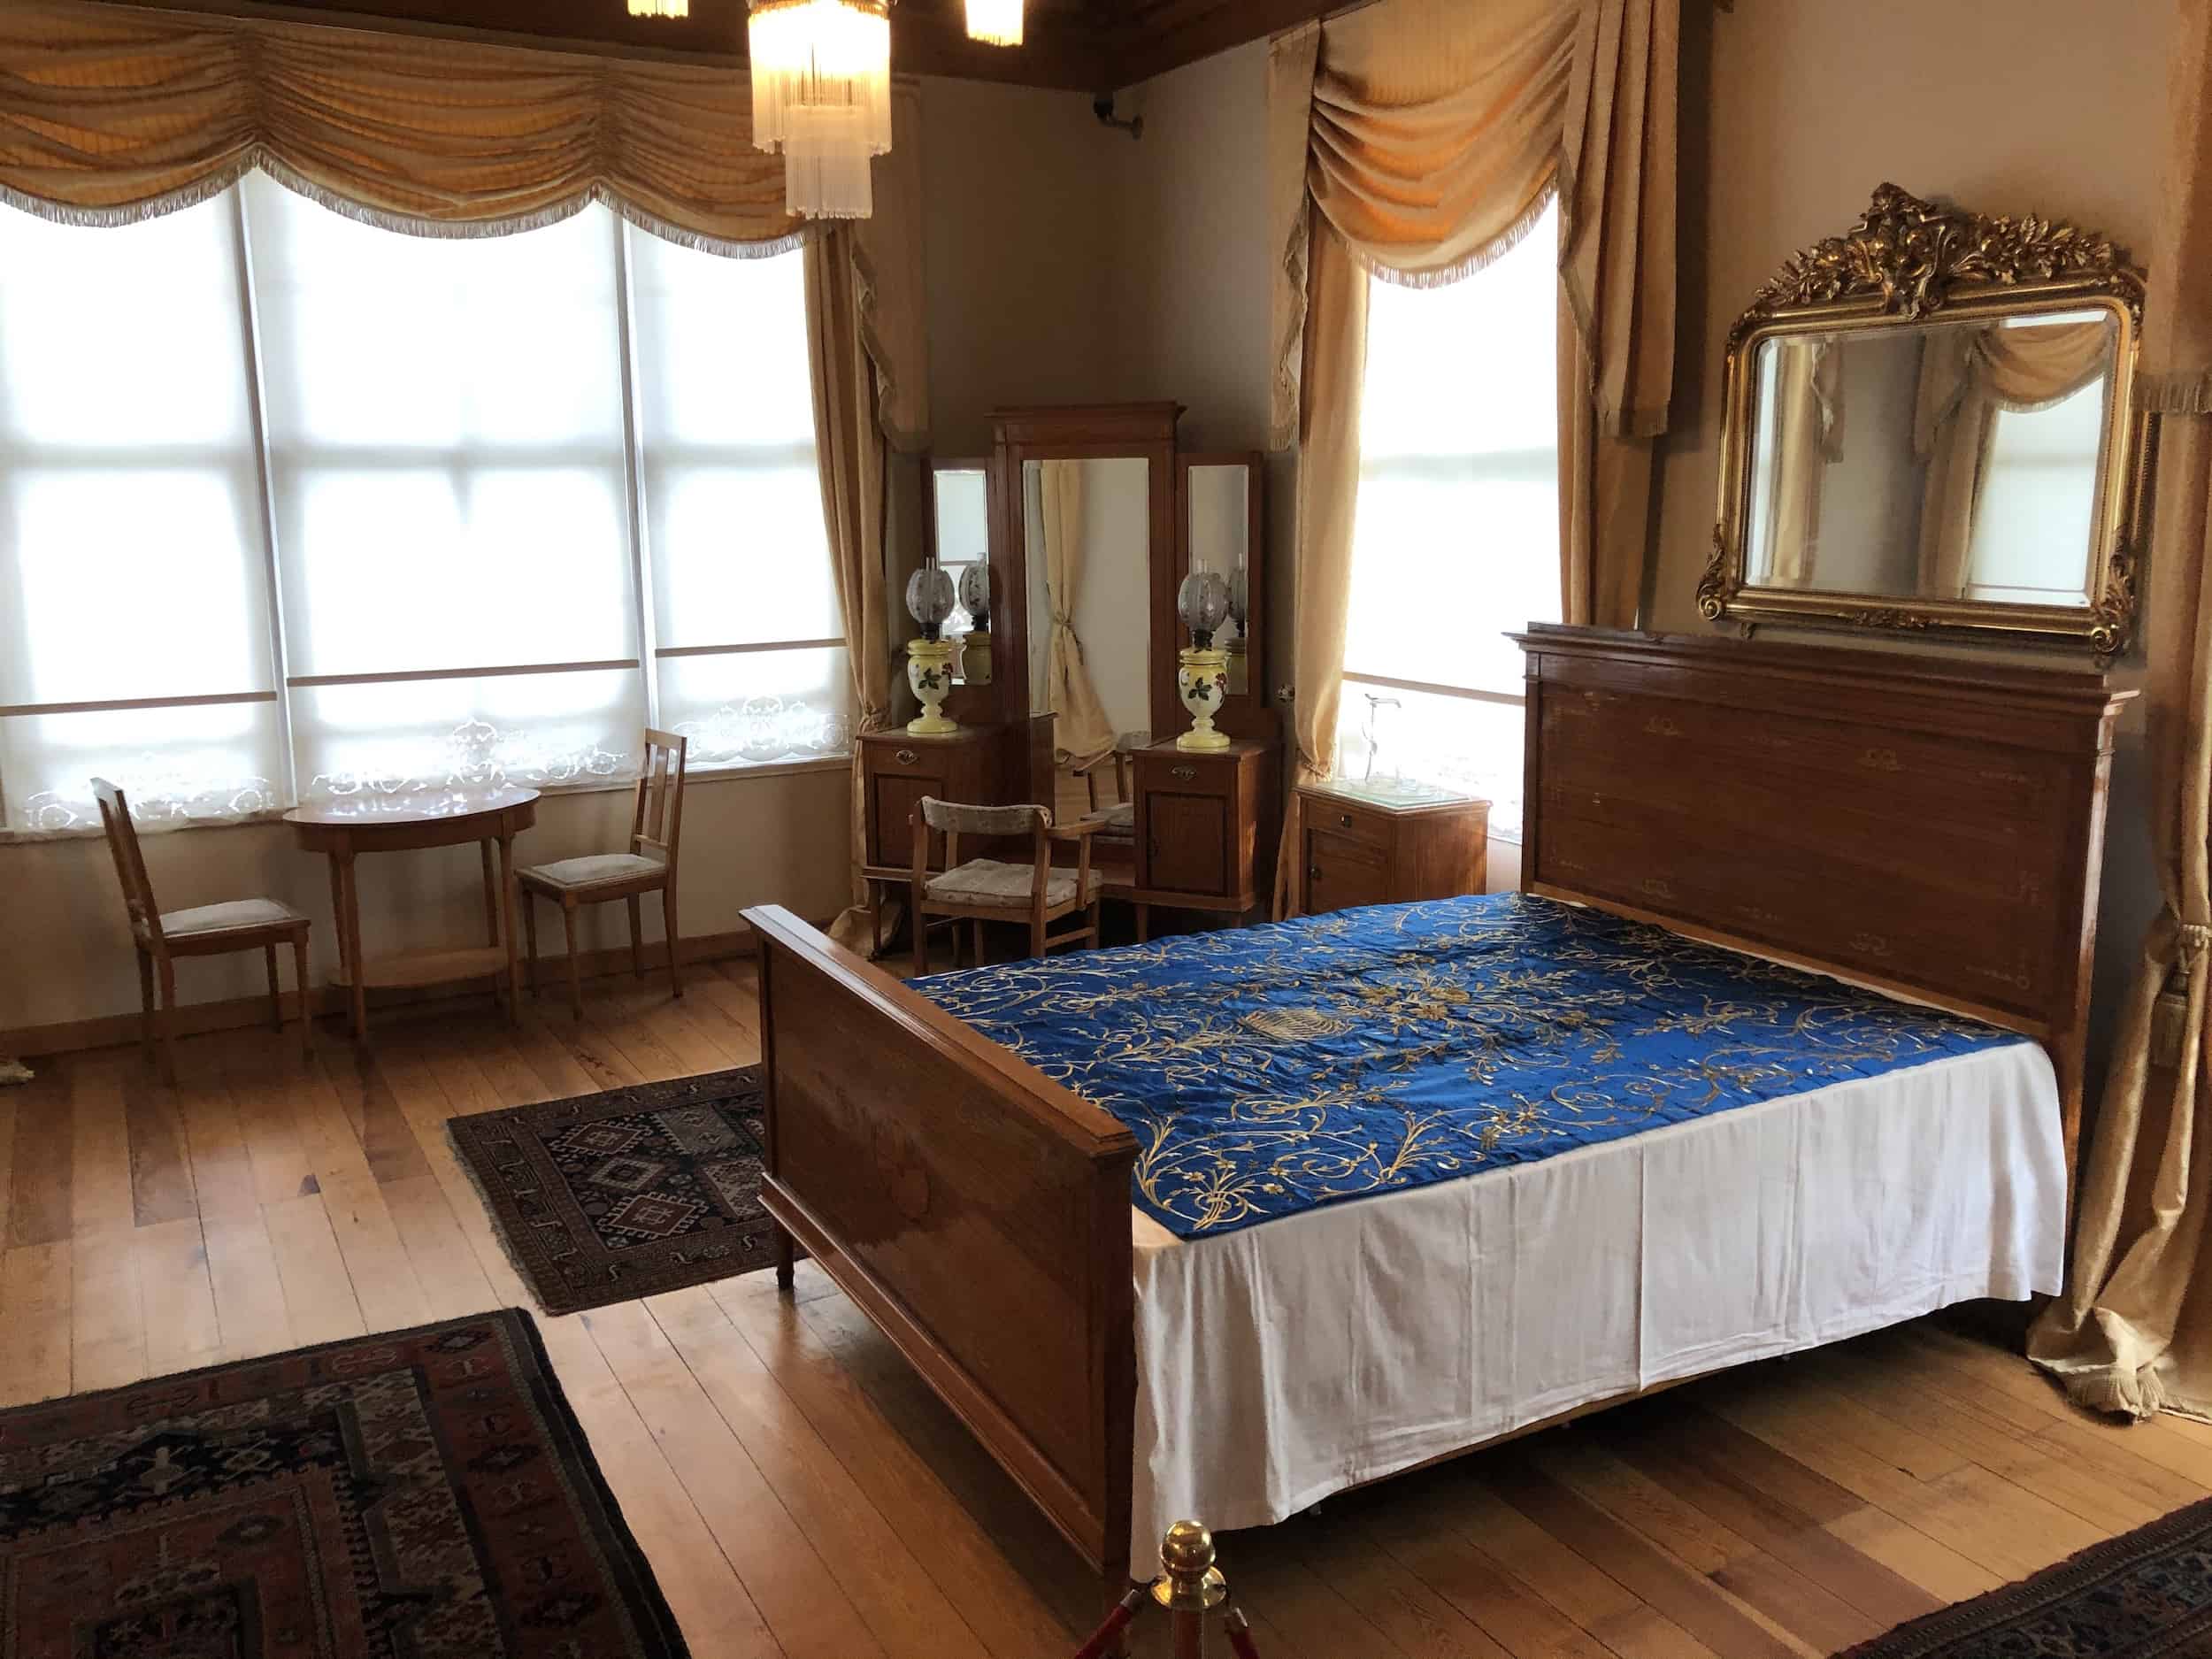 Atatürk's bedroom at the Bursa Atatürk House Museum in Bursa, Turkey